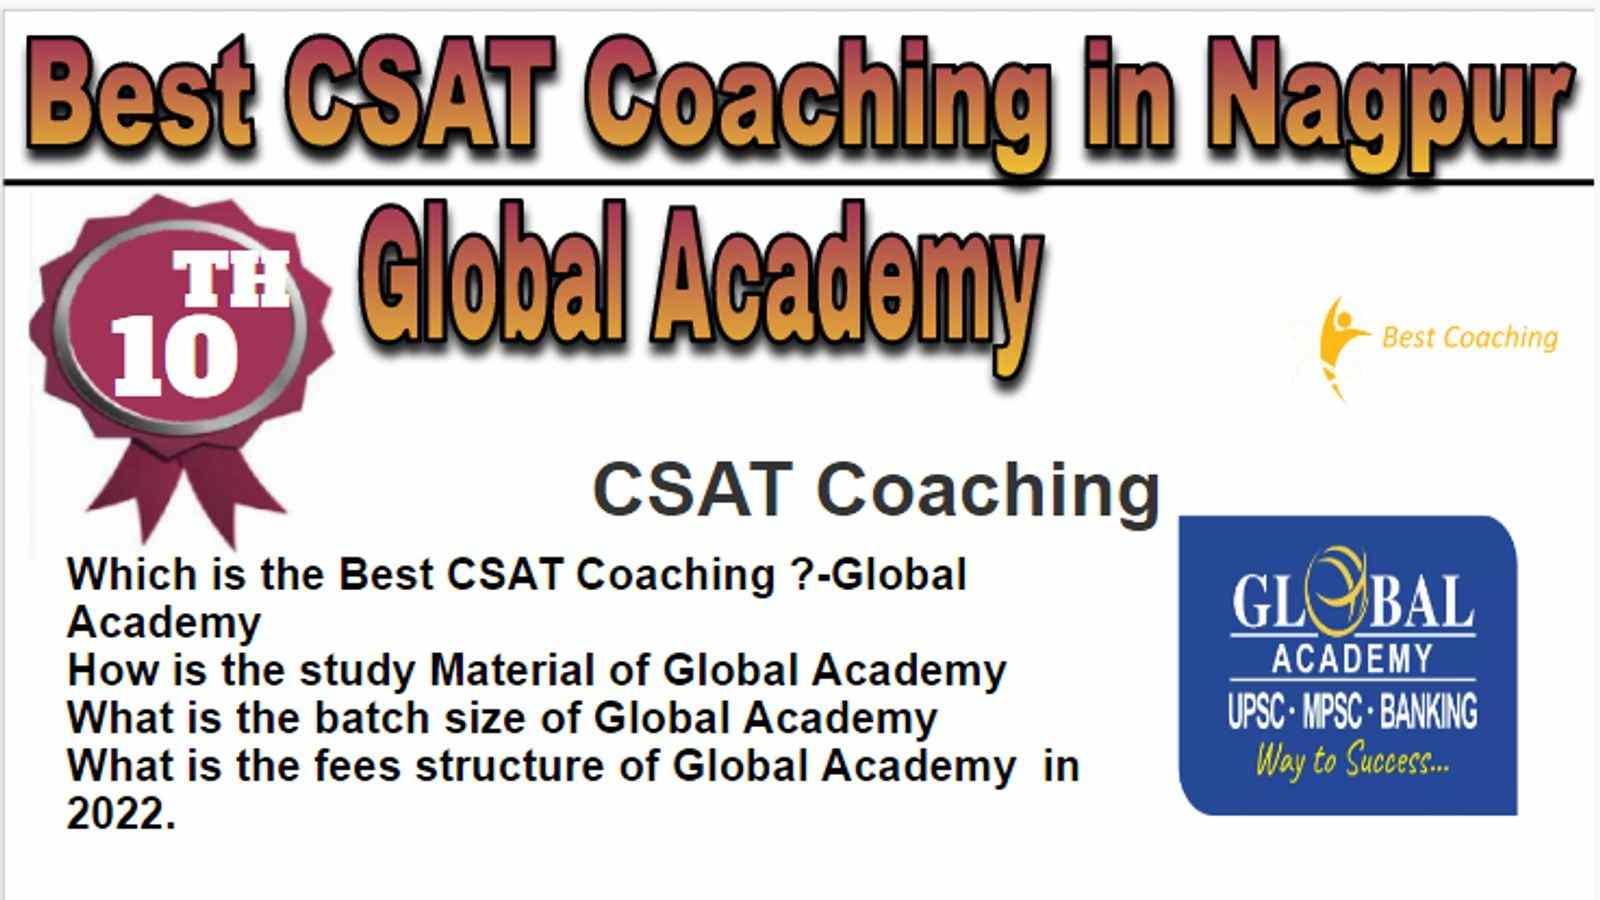 Rank 10 Best CSAT Coaching in Nagpur